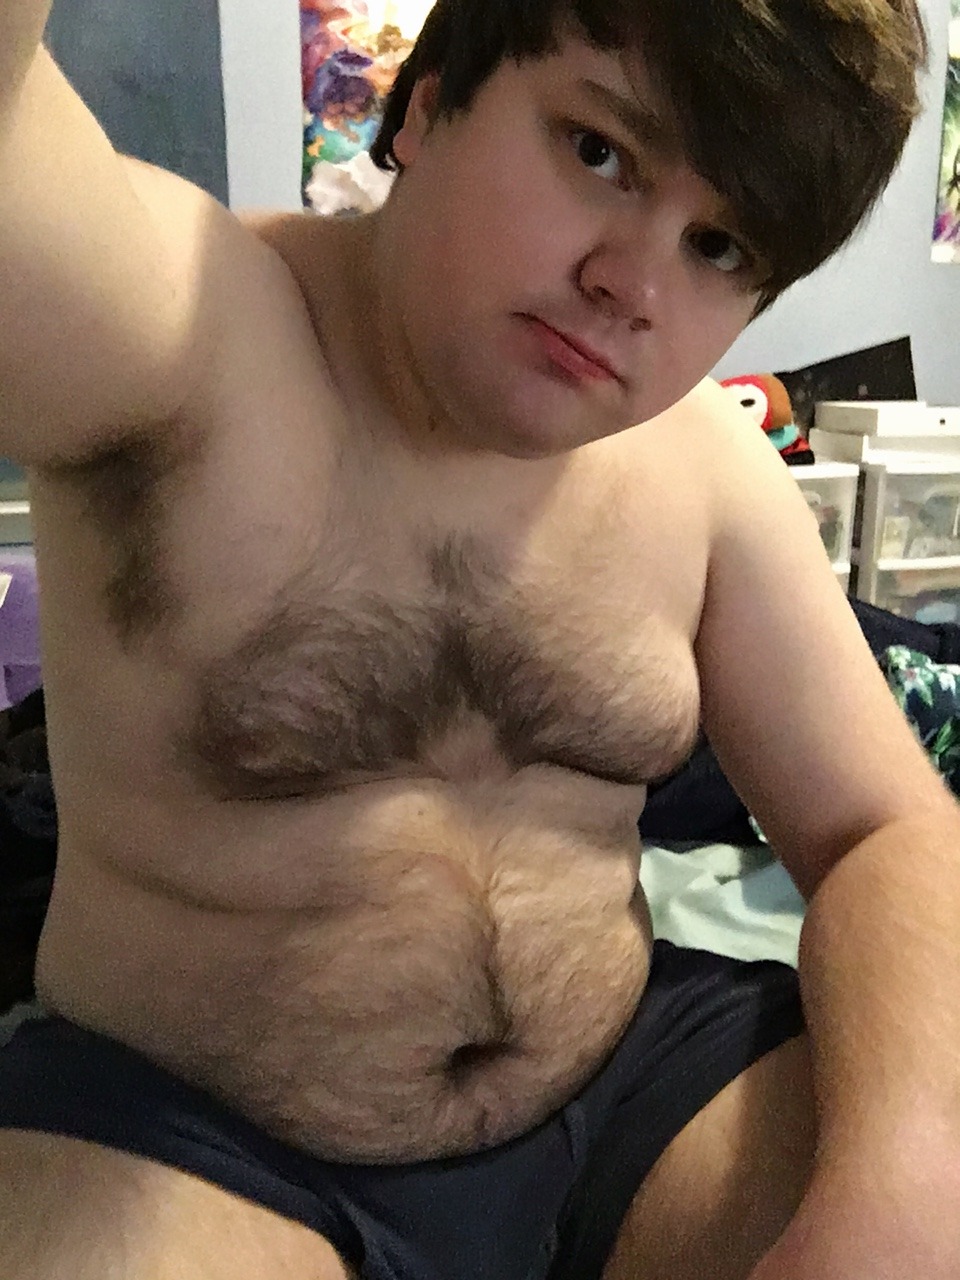 chubby gay porn videos tumblr